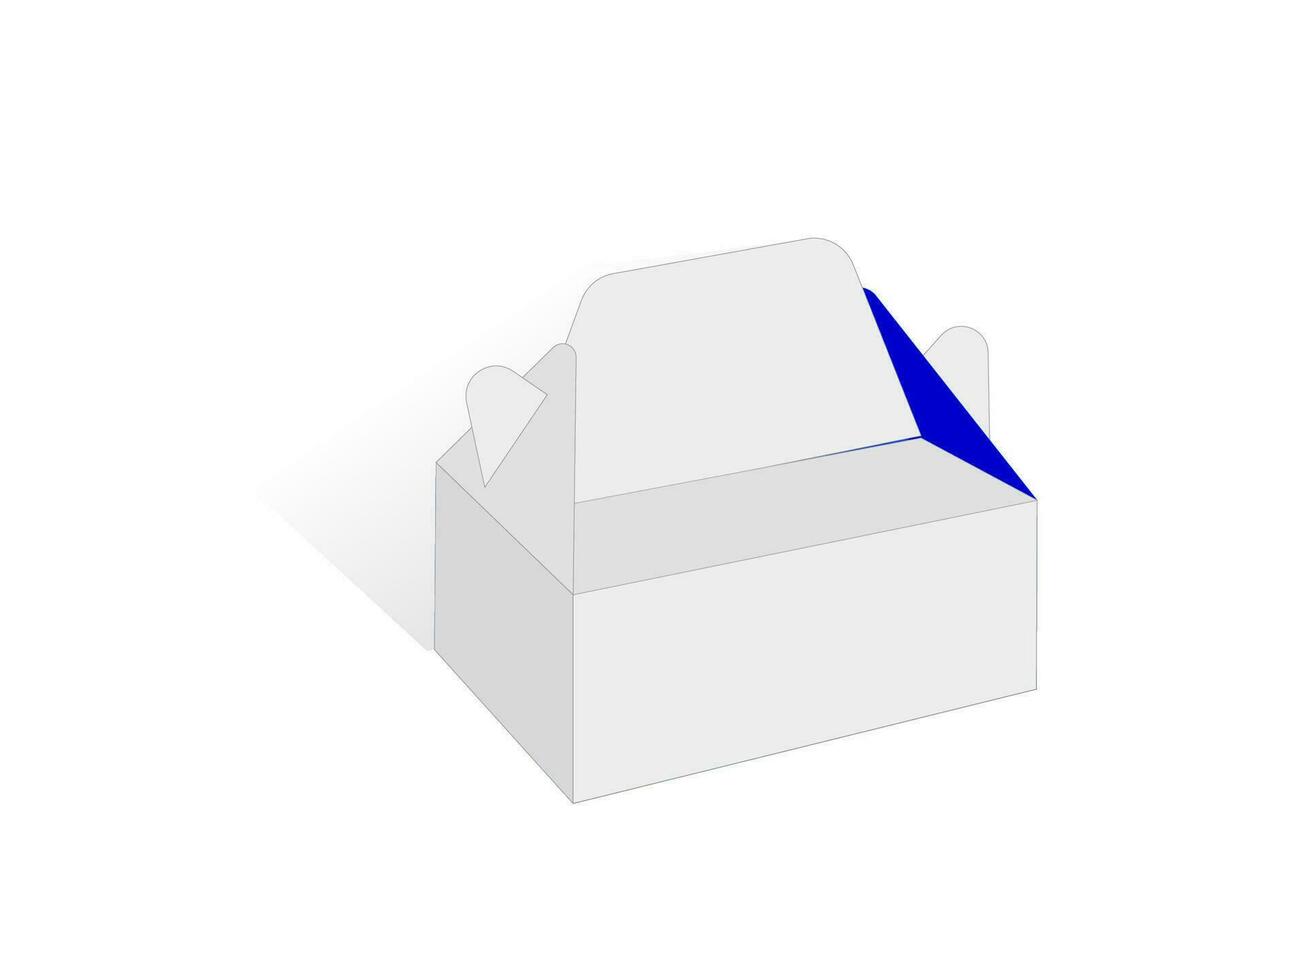 Large Gable Box, Gift Box Template vector